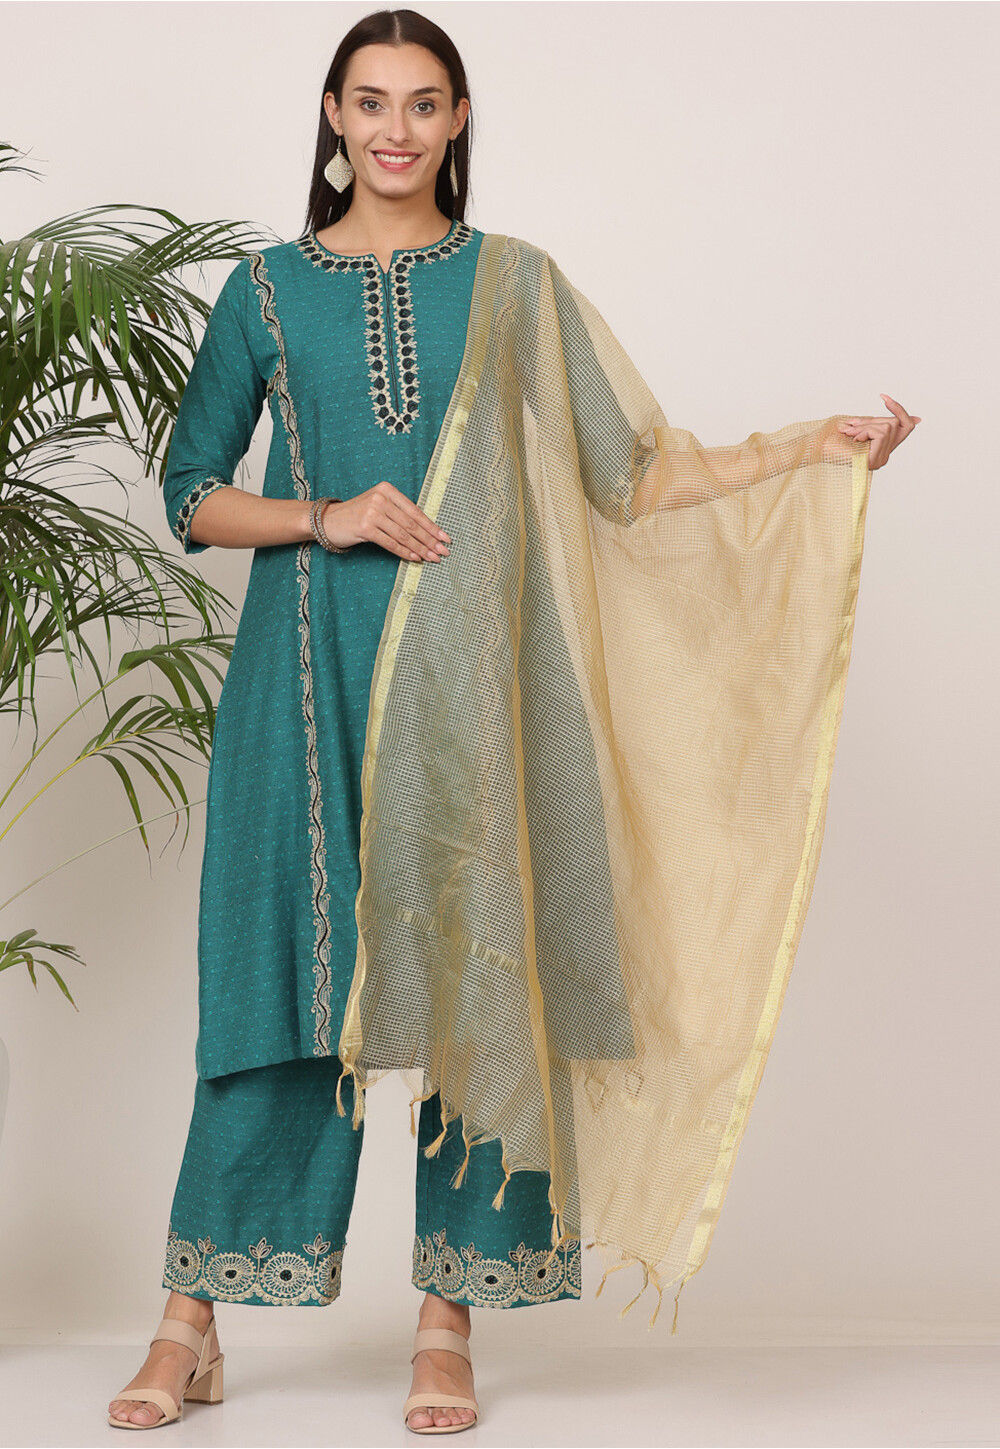 Embroidered Pure Dupion Silk Jacquard Pakistani Suit in Dark Teal Blue ...